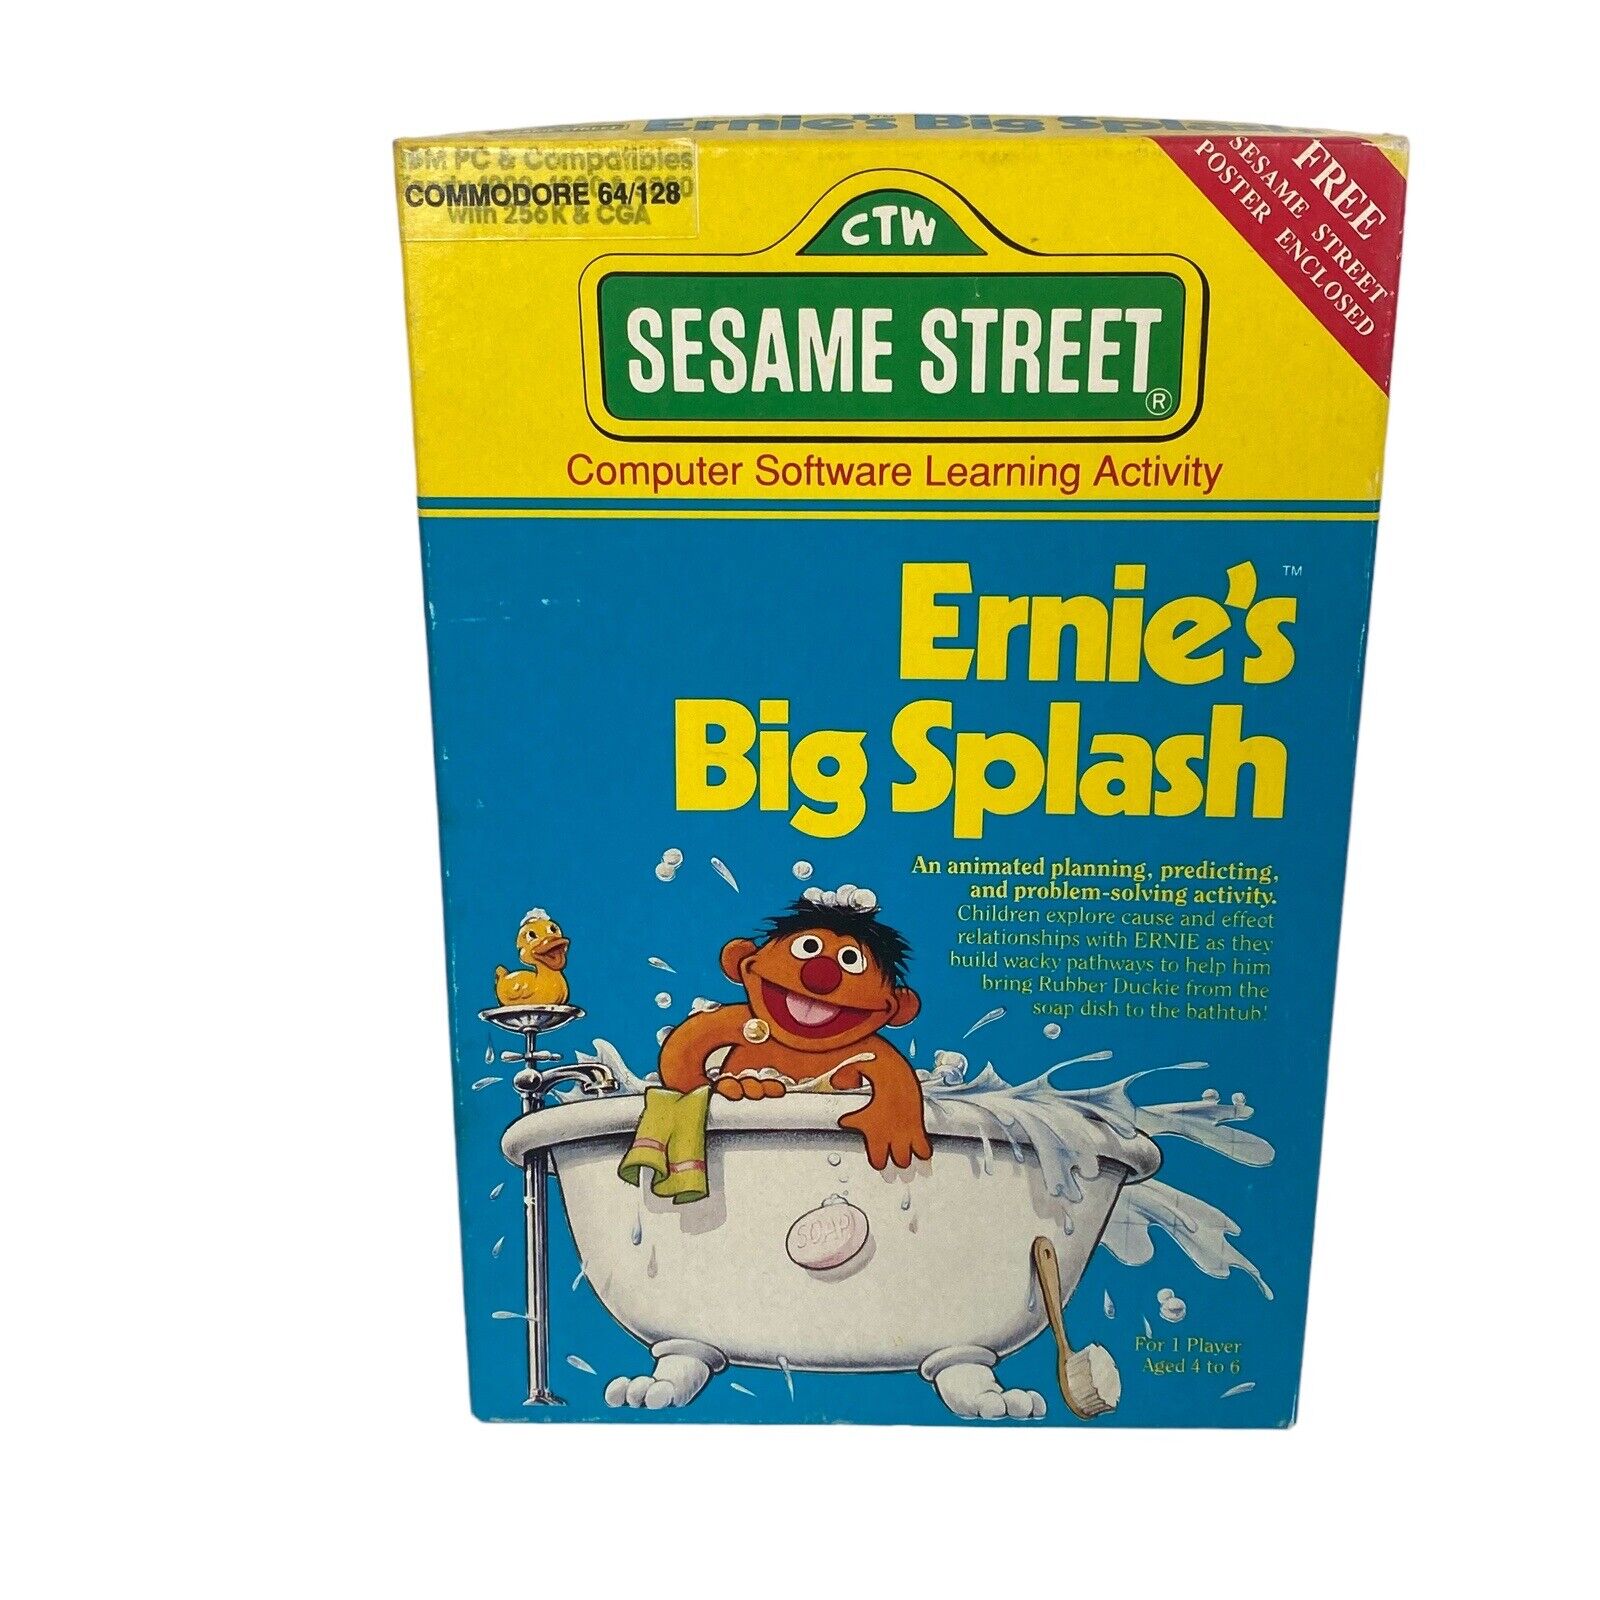 Sesame Street Ernie's Big Splash Commodore Computer Game Software Complete VTG